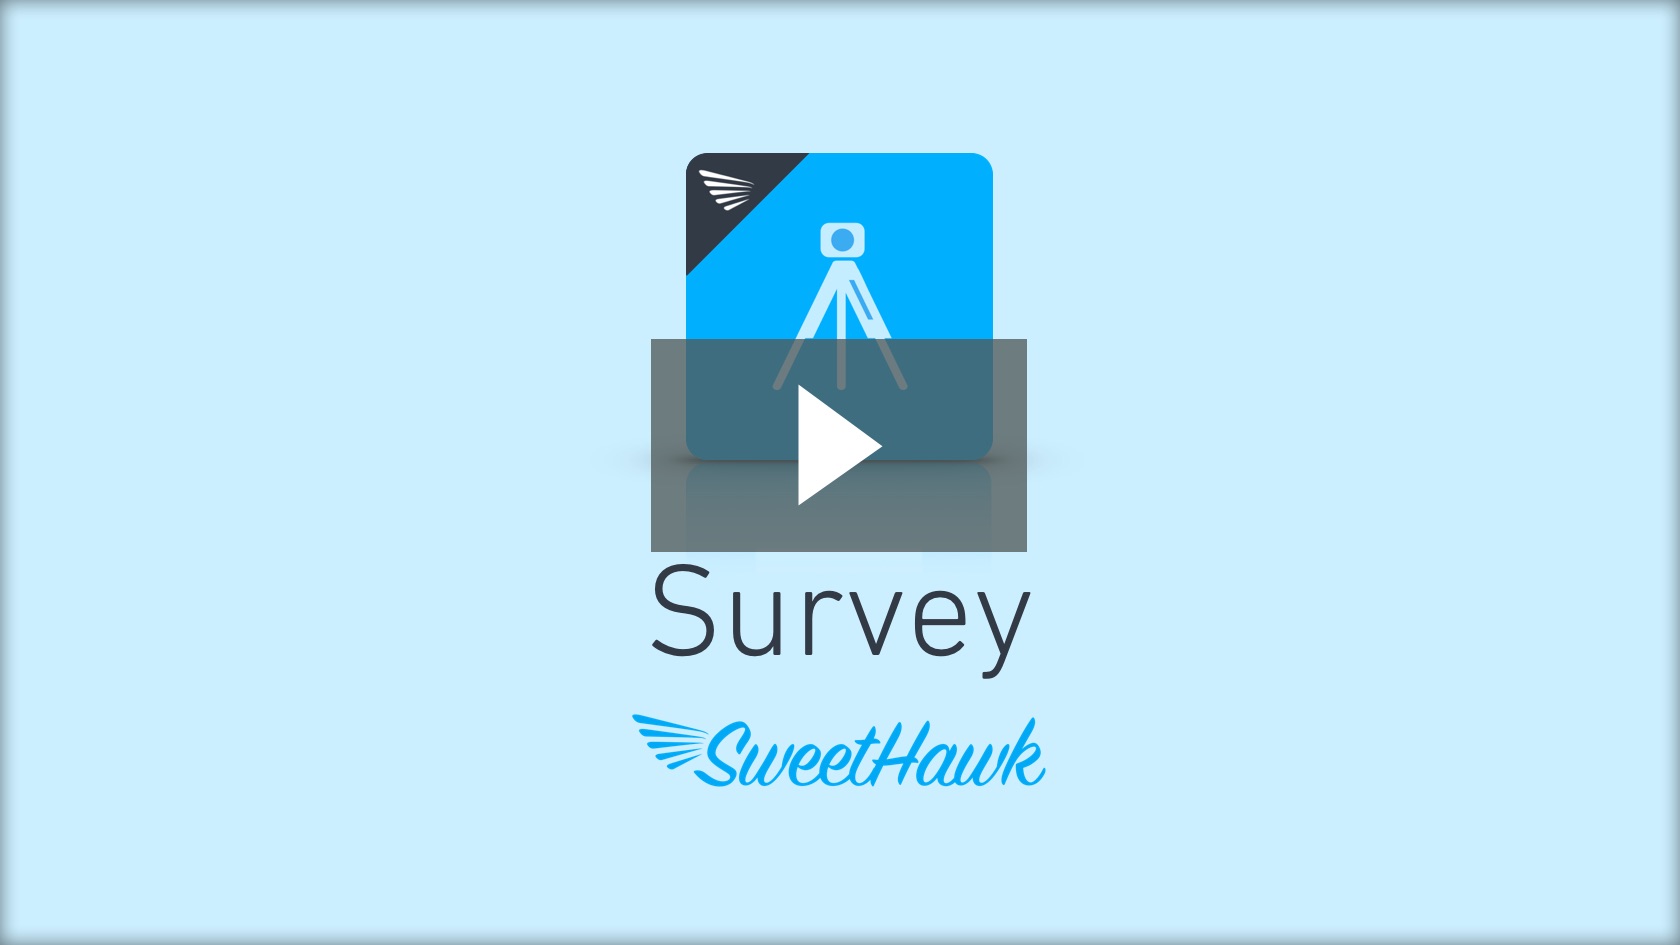 Watch the Survey app video